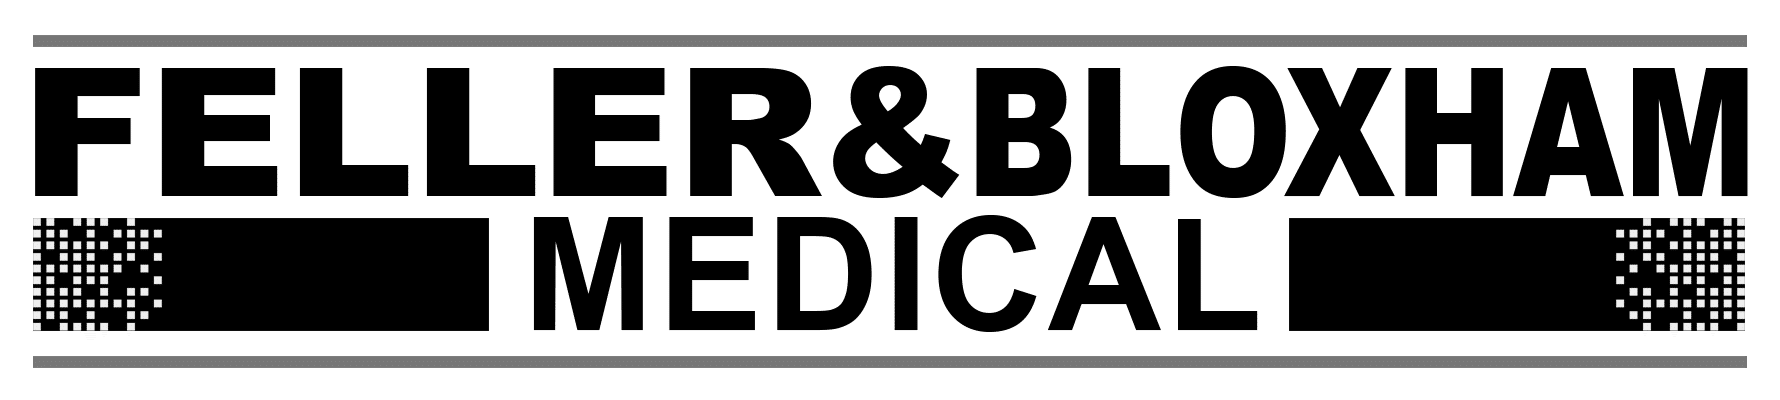 Feller & Bloxham Medical Logo